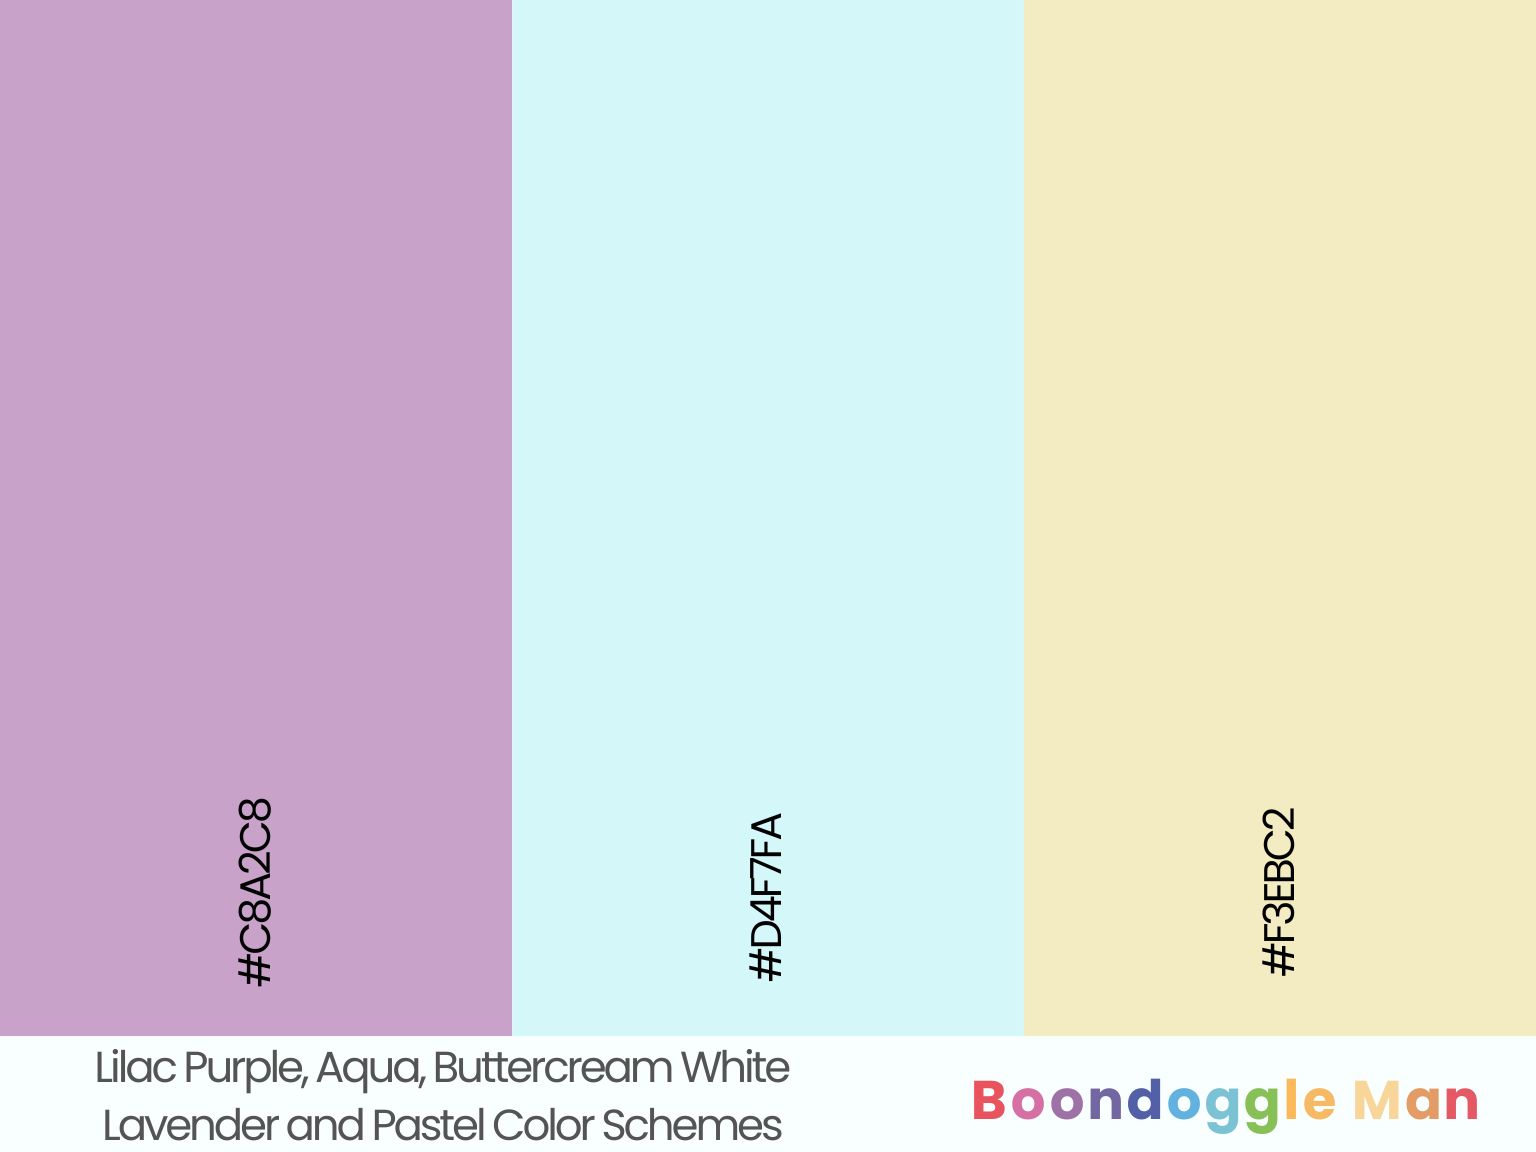 Lilac Purple, Aqua, Buttercream White